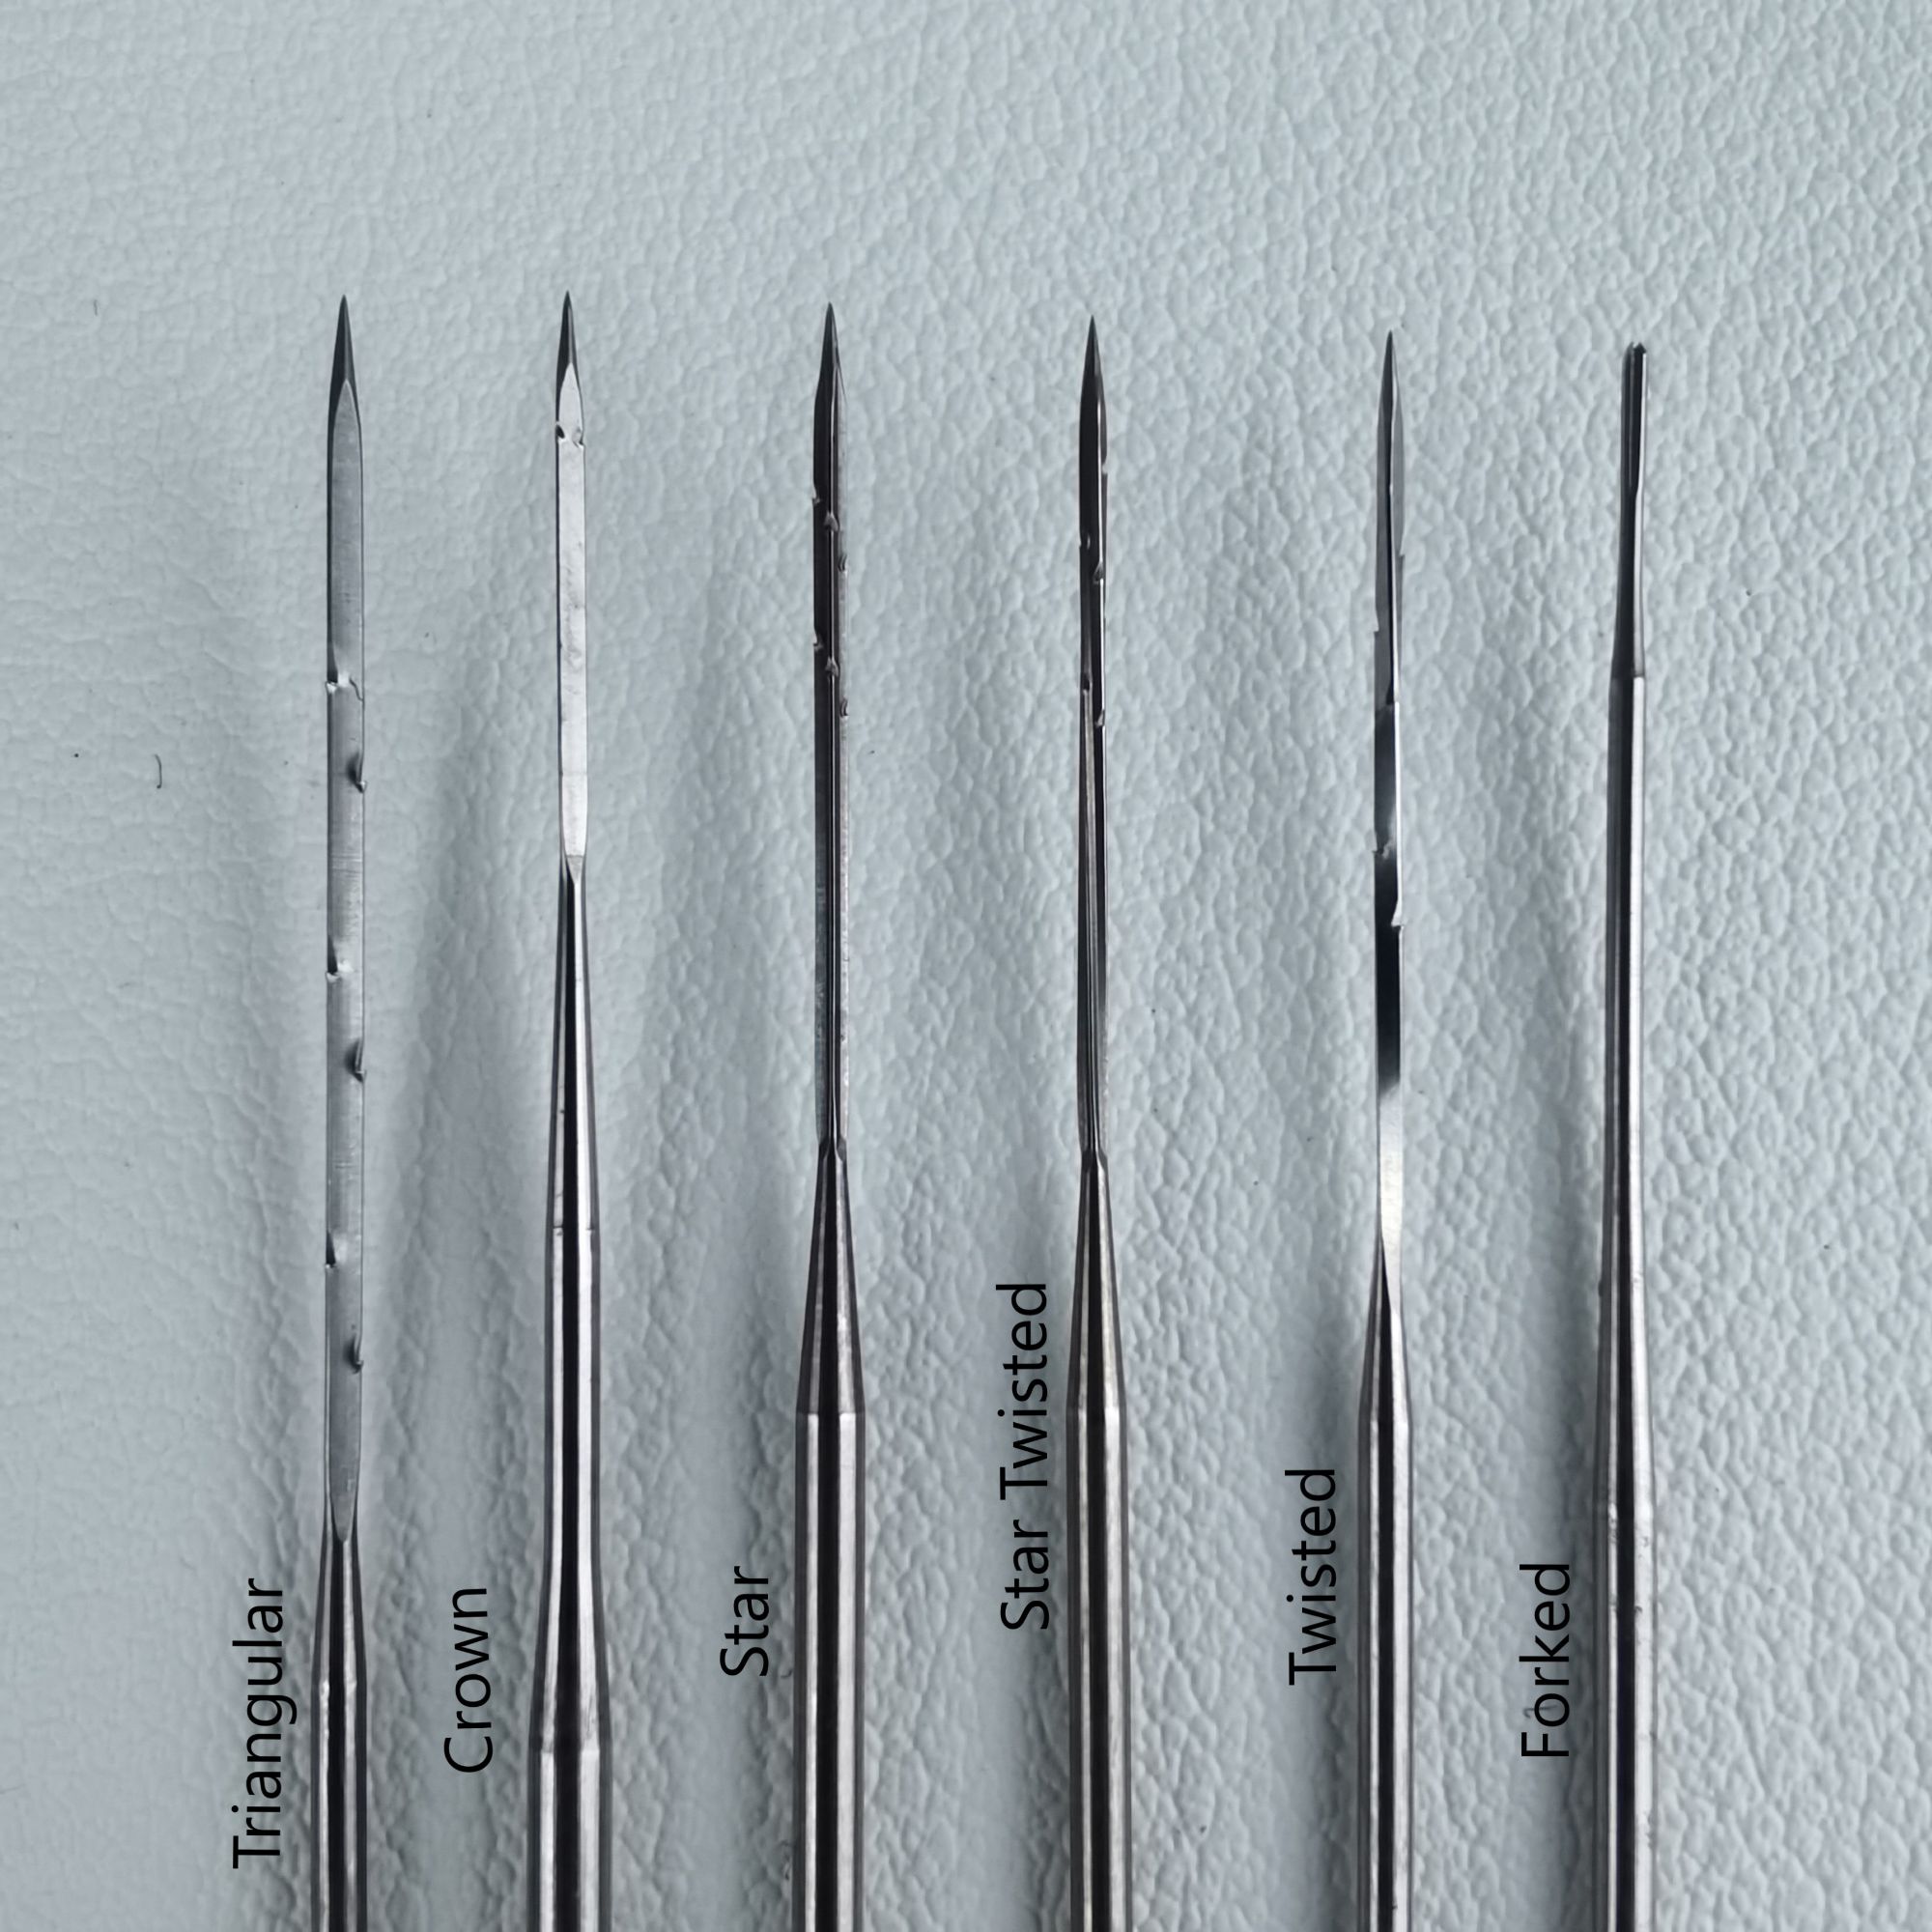 Multi Needle Felting Tool with 7 Needles